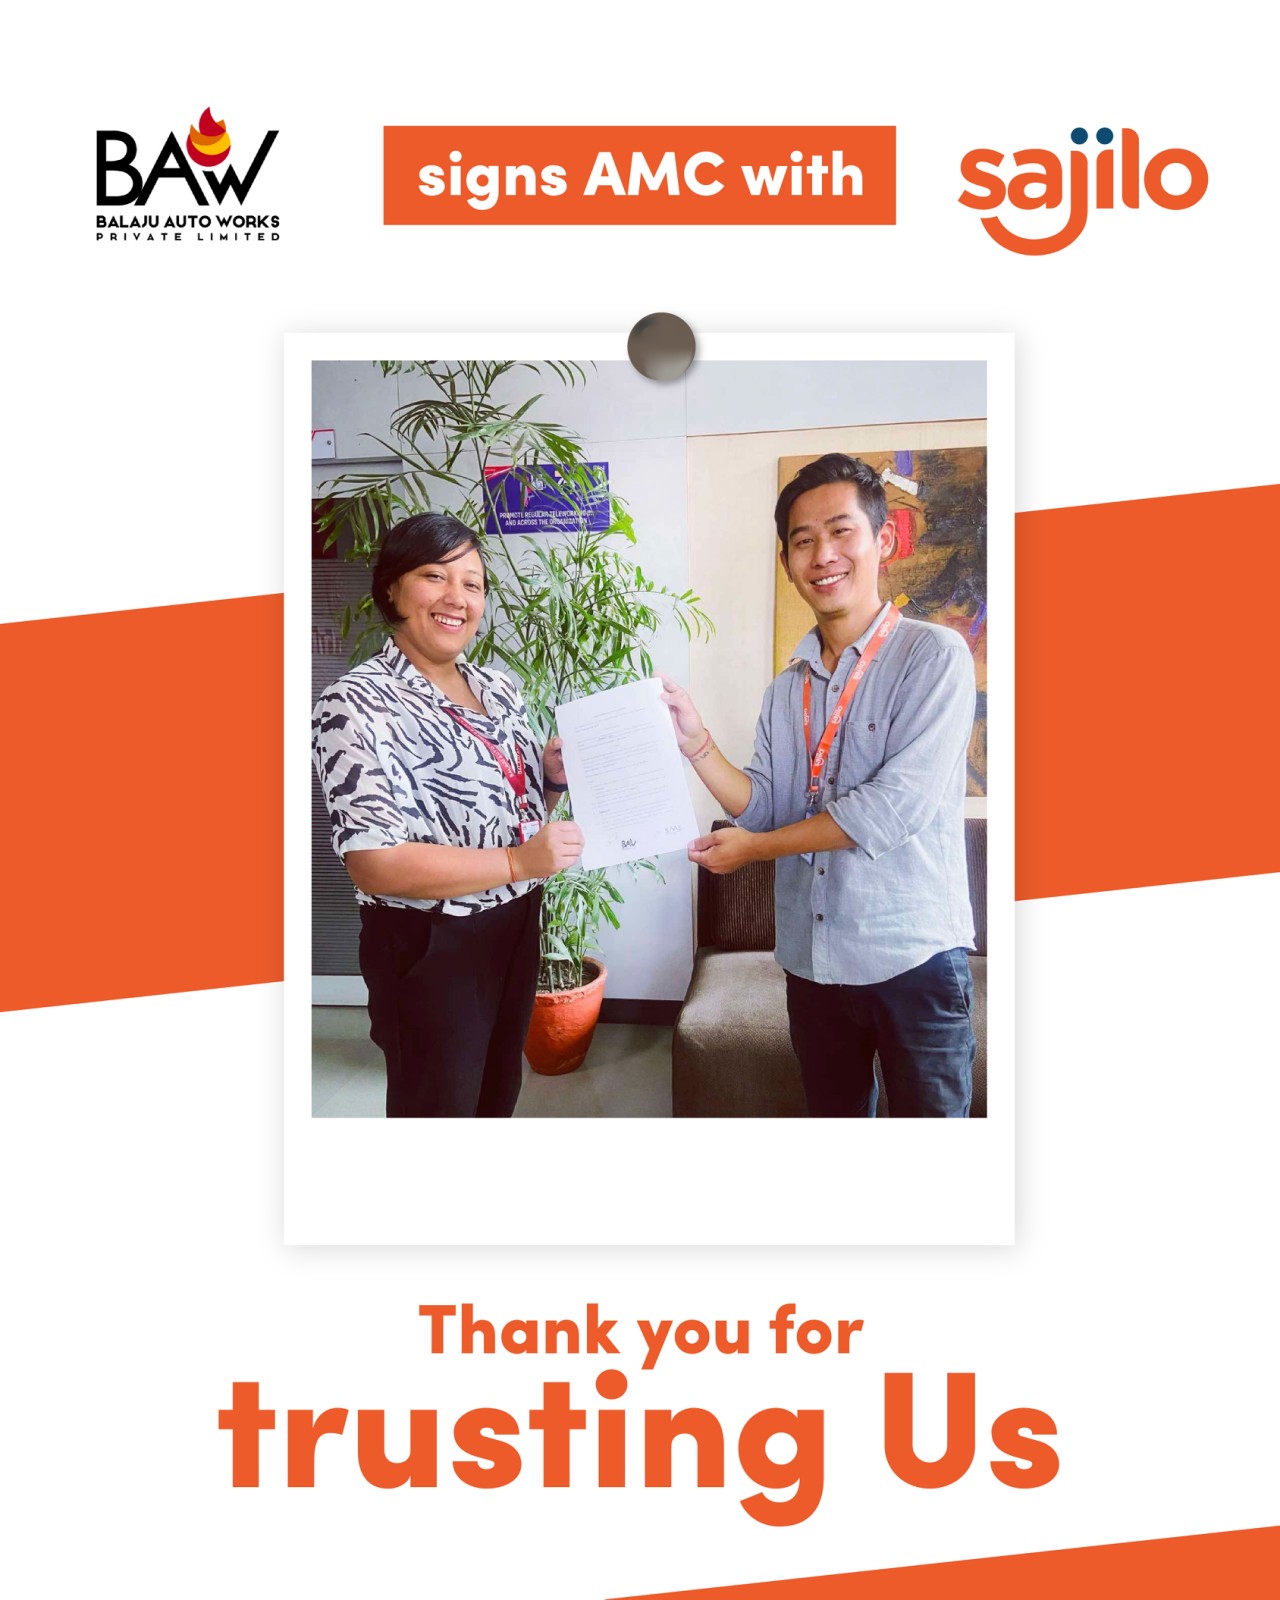 AMC signed with Balaju Auto Works